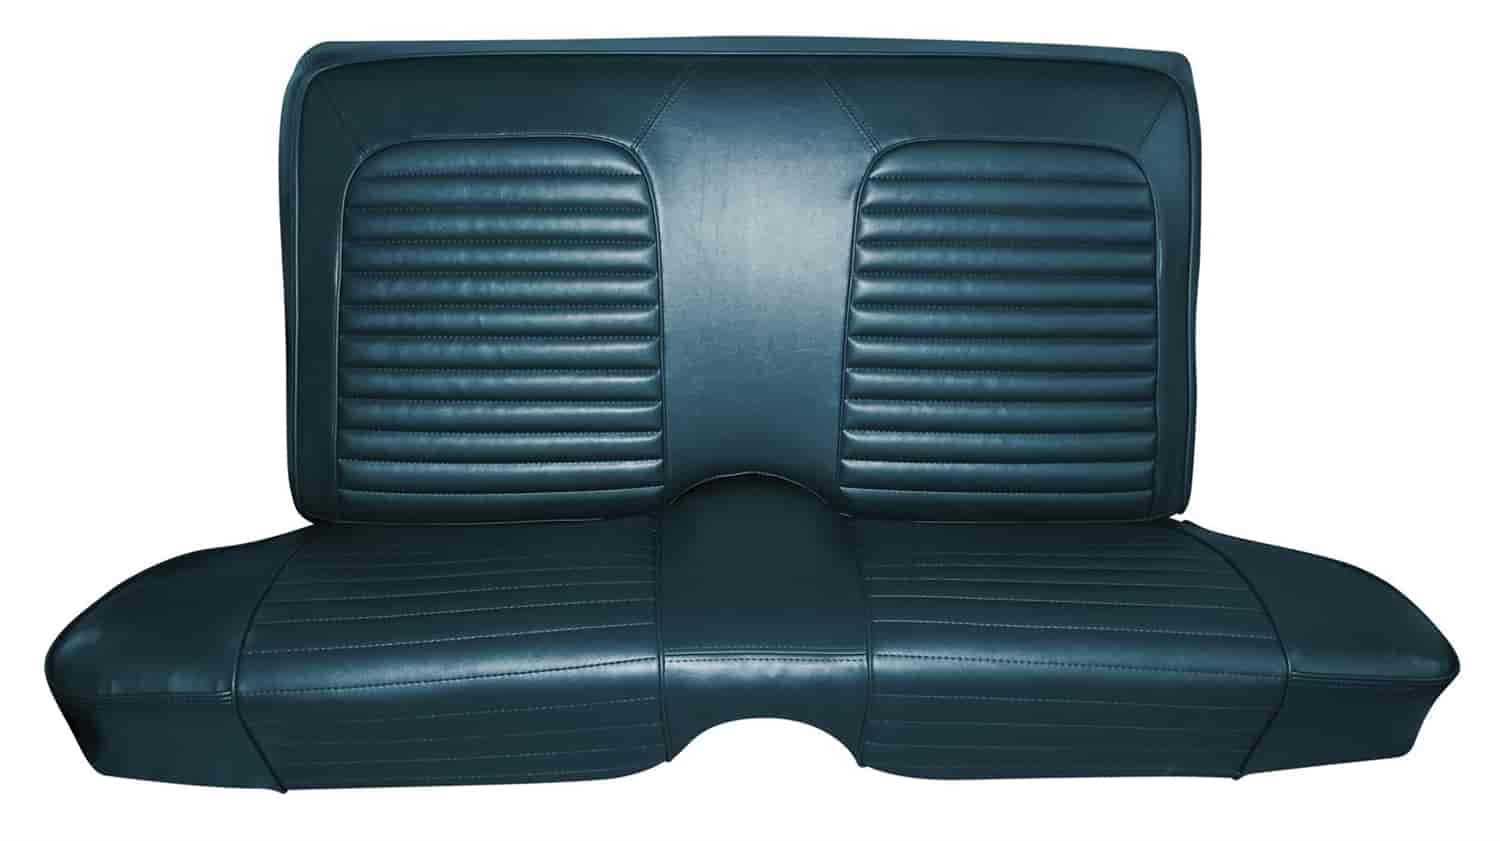 1964 Ford Falcon Futura 2-Door Hardtop Interior Rear Bench Seat Upholstery Set